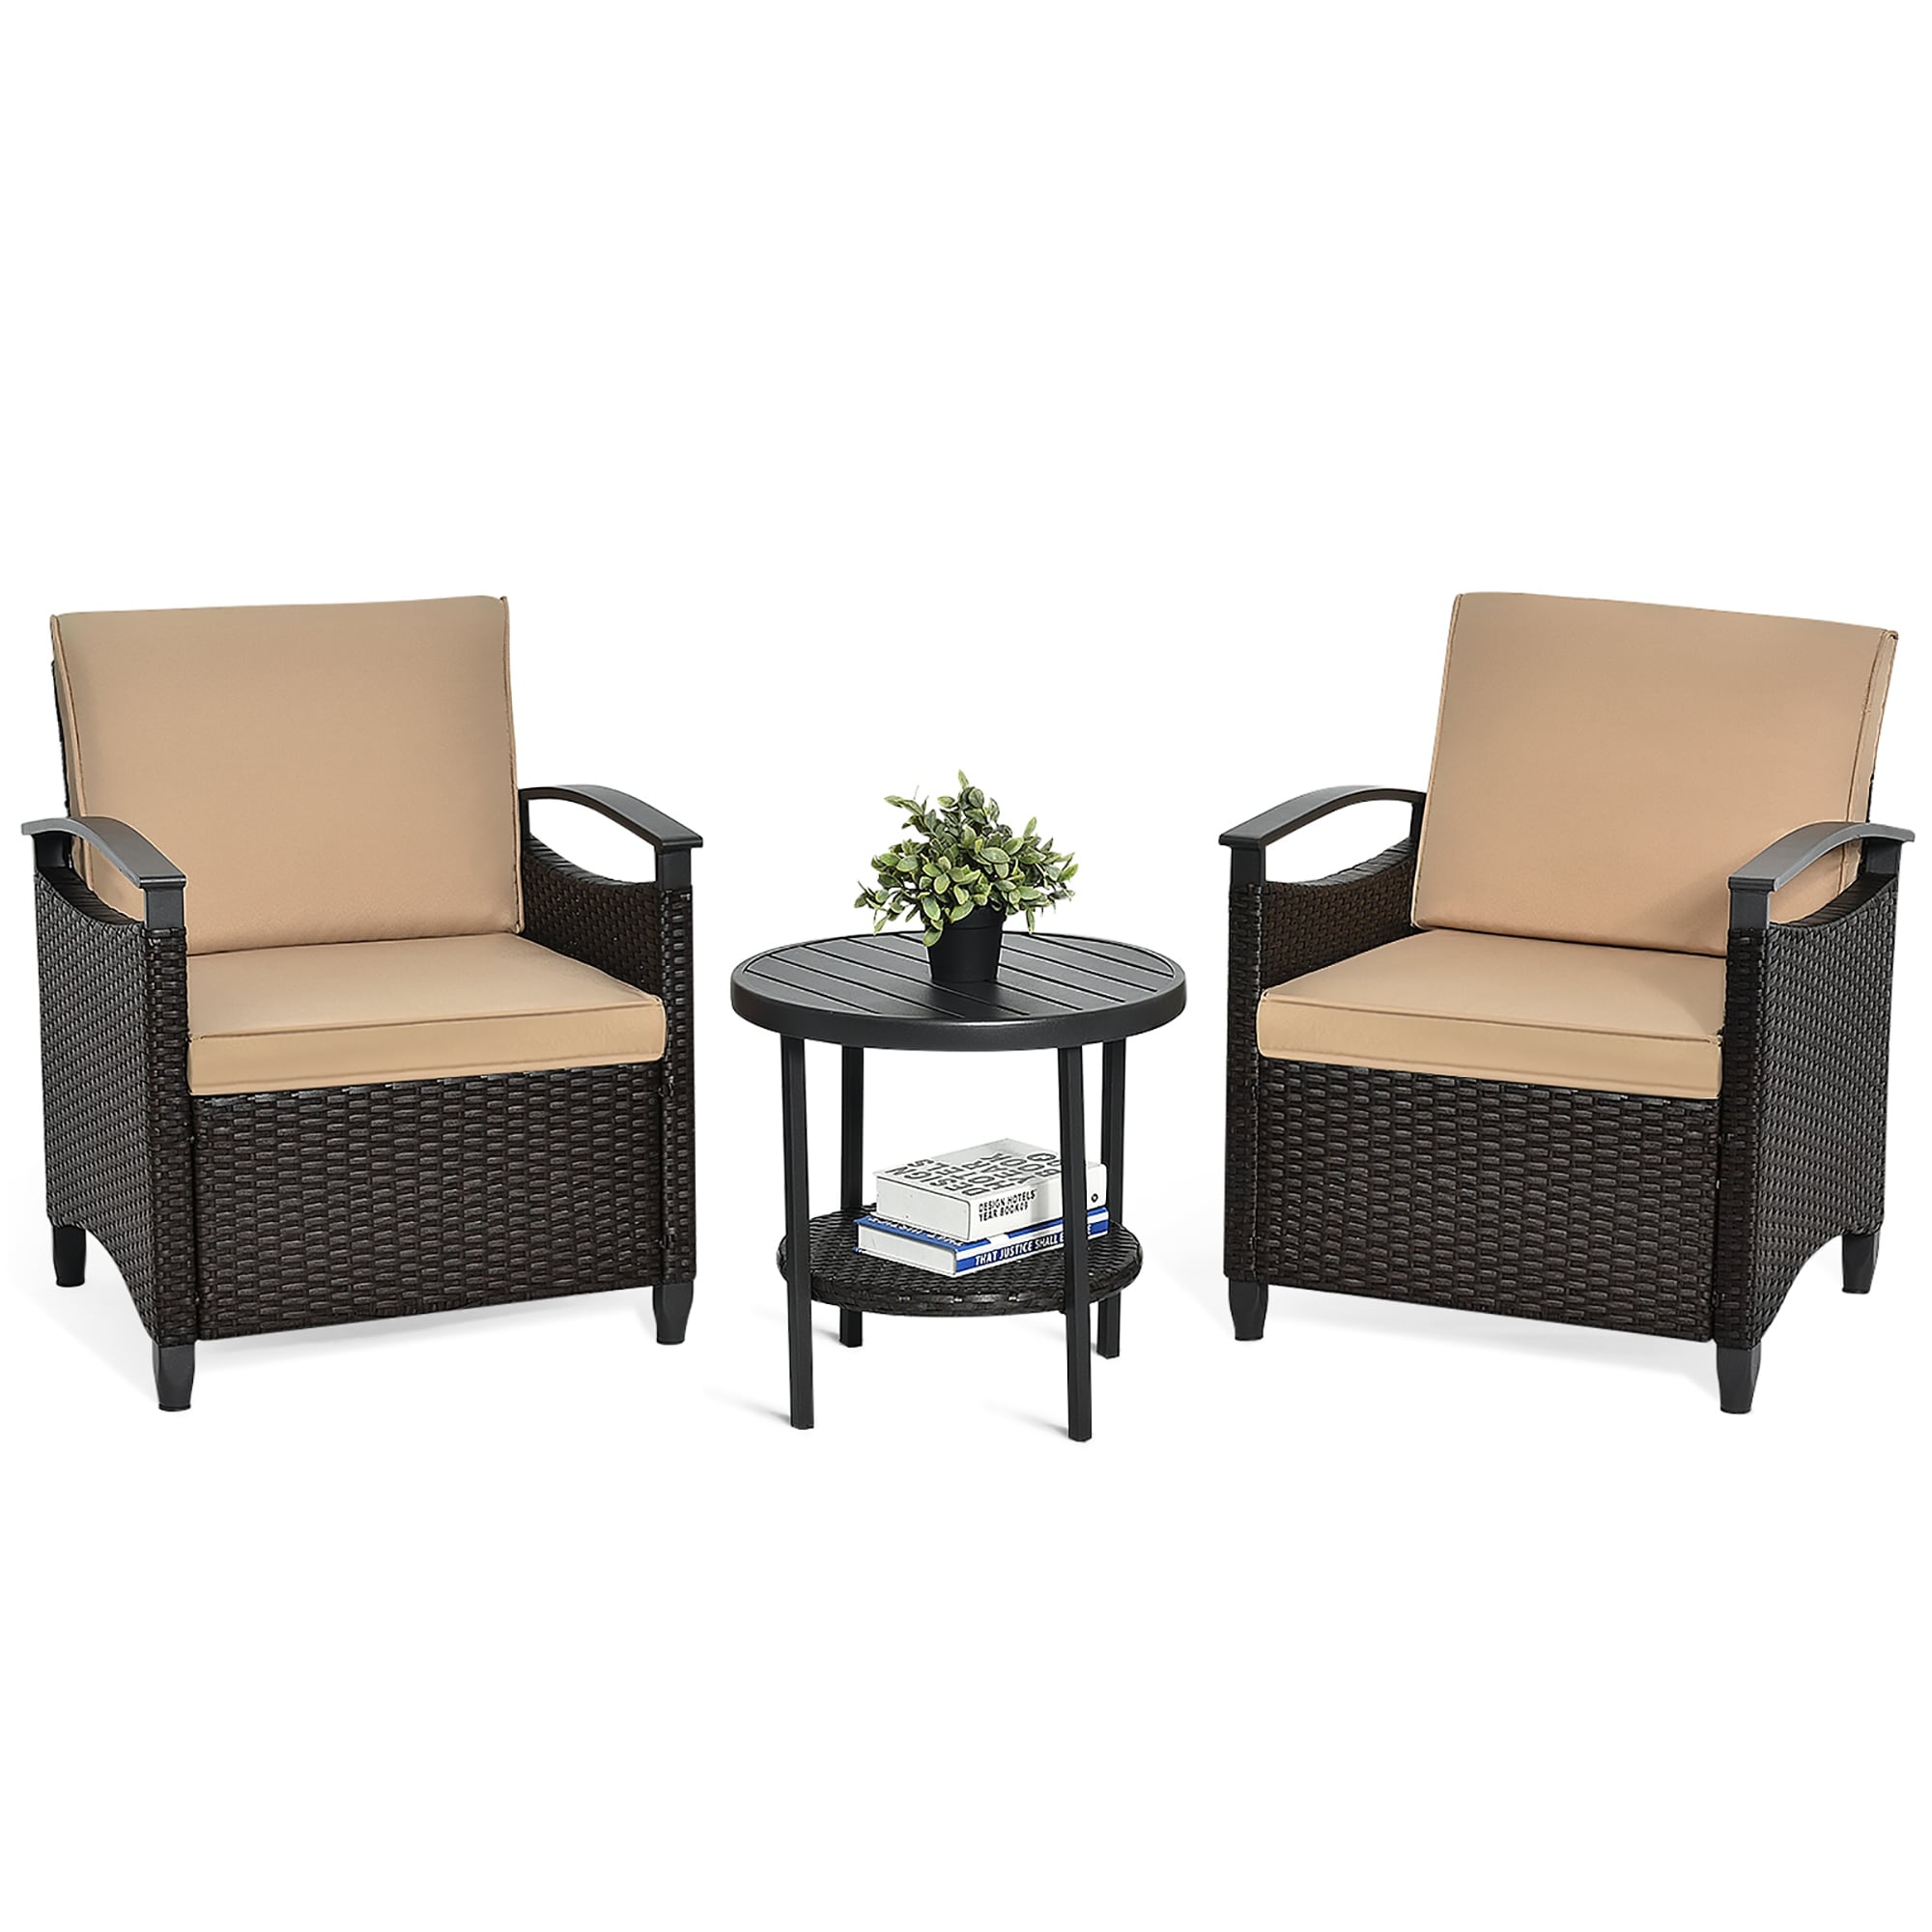 3 Pcs Rattan Sofa Set Patio Conversation Set With Coffee Table